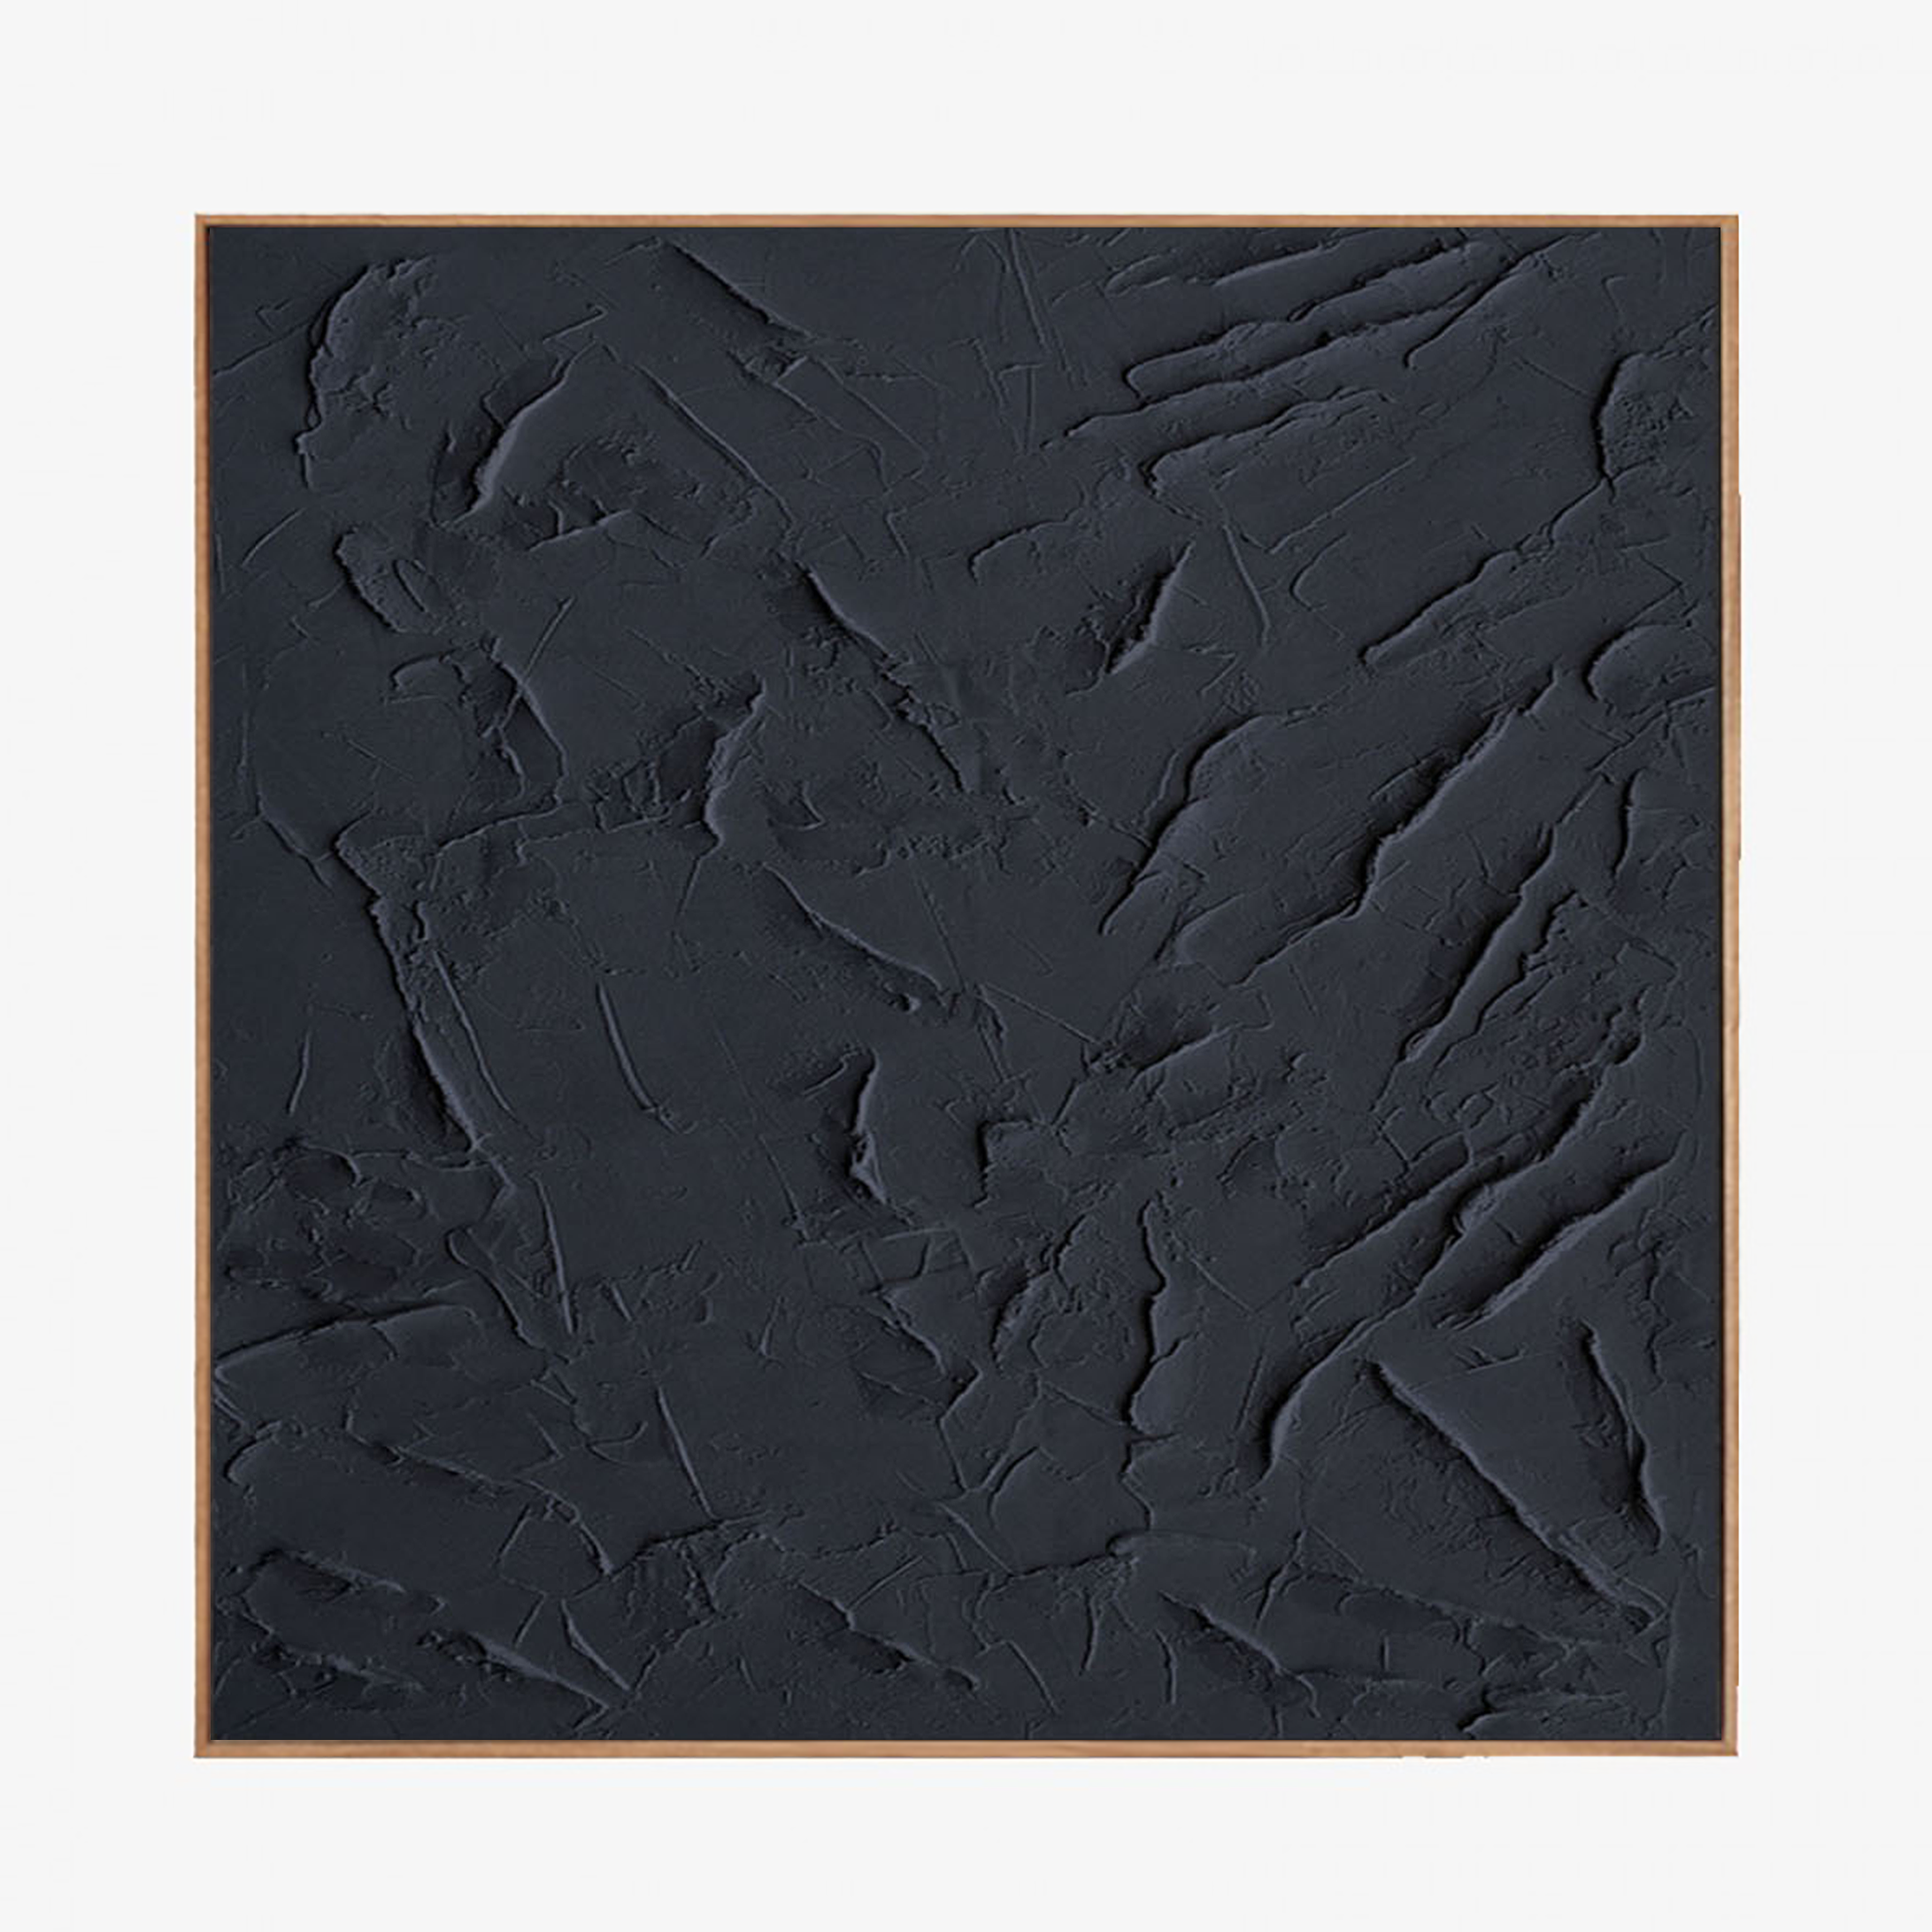 Black Textured Plaster Art Painting Minimalist Zen Wall Decor for Room